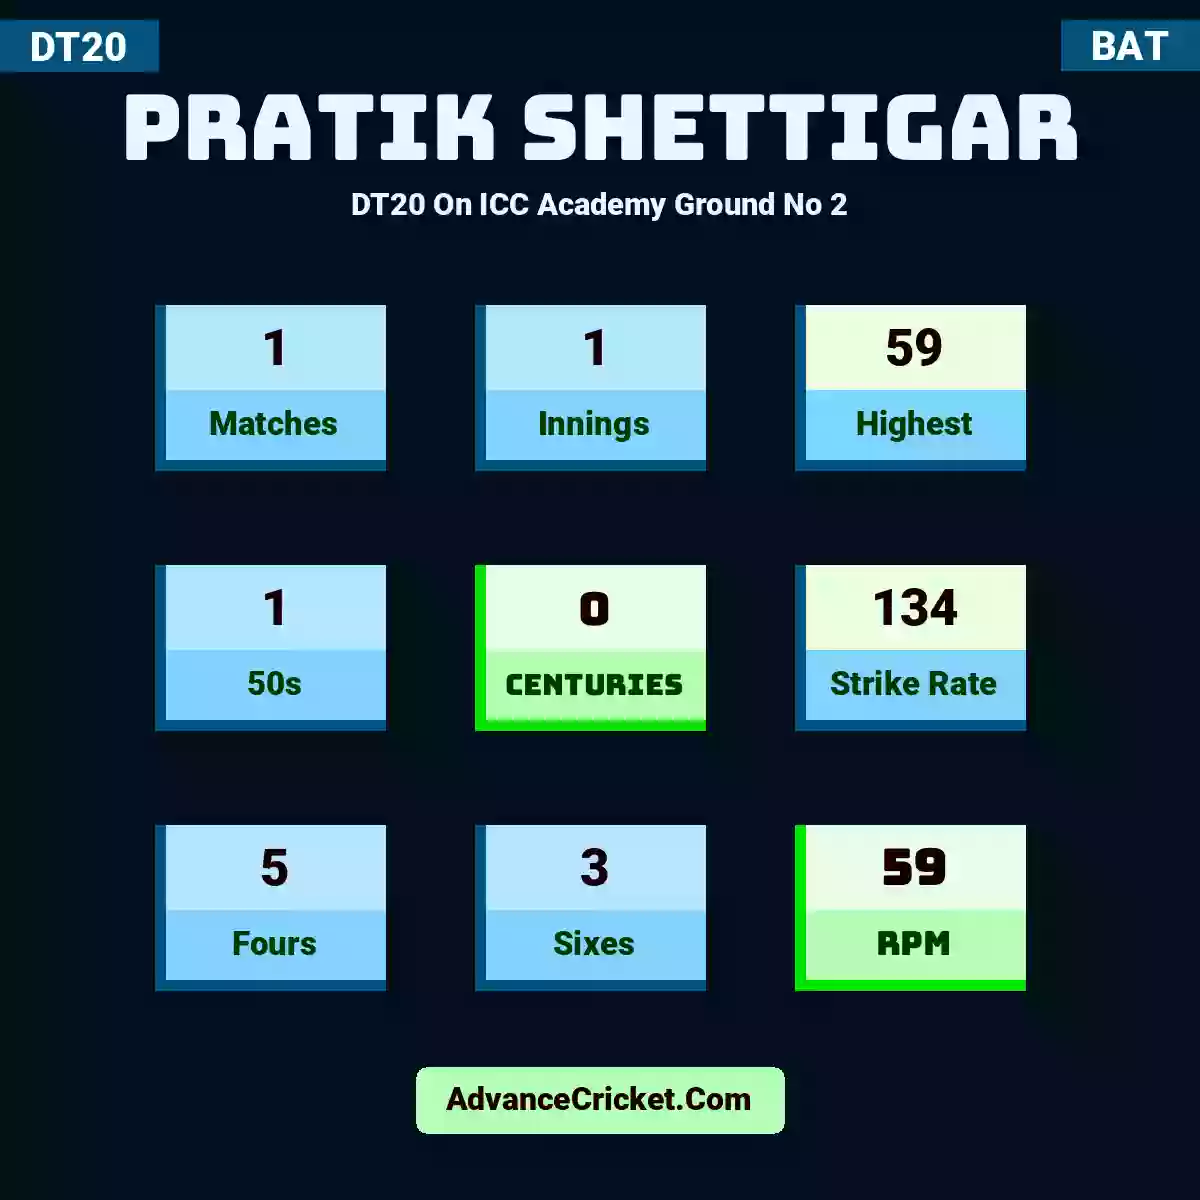 Pratik Shettigar DT20  On ICC Academy Ground No 2, Pratik Shettigar played 1 matches, scored 59 runs as highest, 1 half-centuries, and 0 centuries, with a strike rate of 134. P.Shettigar hit 5 fours and 3 sixes, with an RPM of 59.